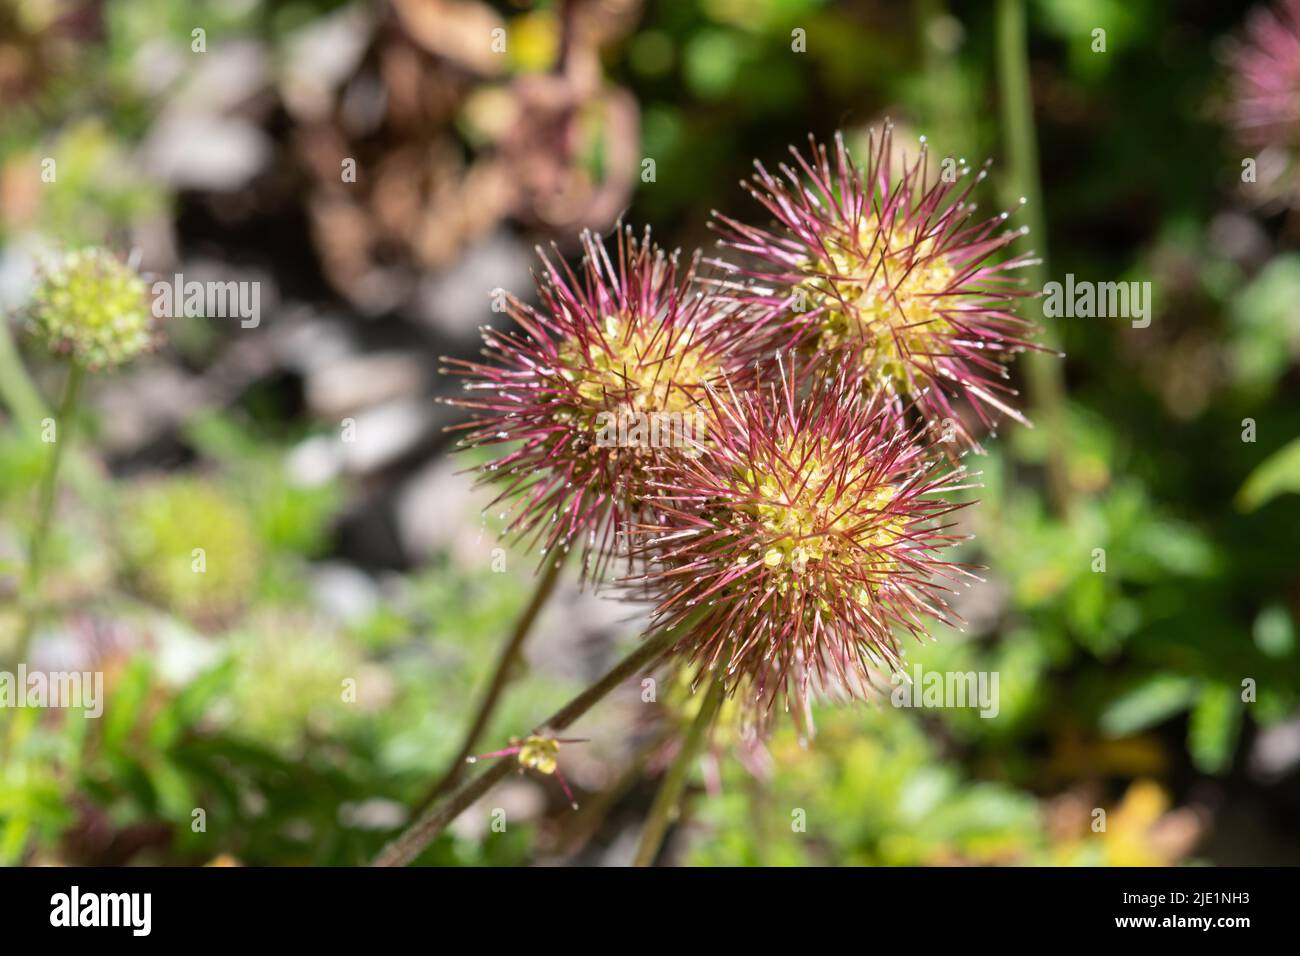 Pirri-pirri-bur (acaena novae-zelandiae), an invasive weed plant in the UK originating from New Zealand and Australia Stock Photo